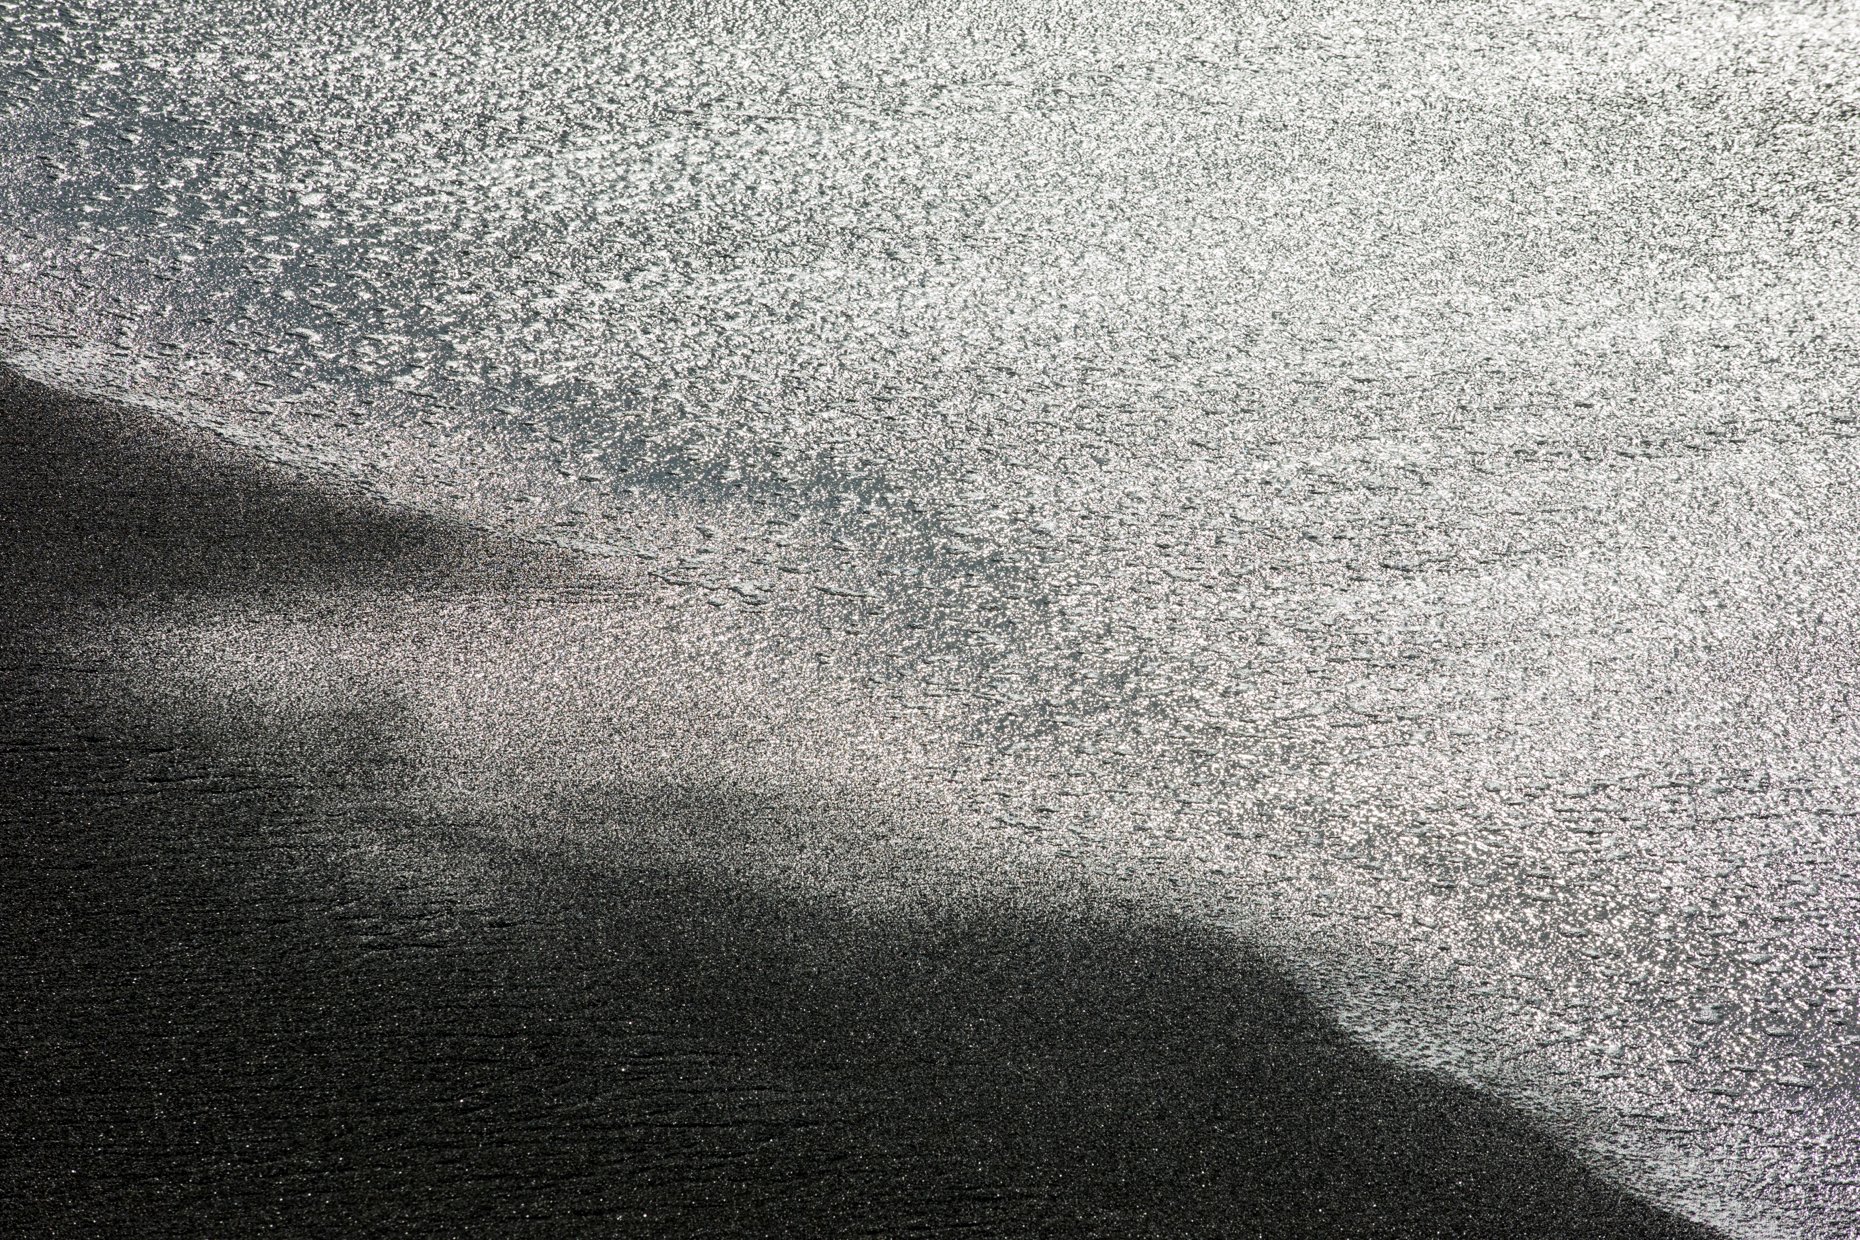 Close up abstract view of waves washing up on the beach at San Simeon State Park, San Simeon, California, USA